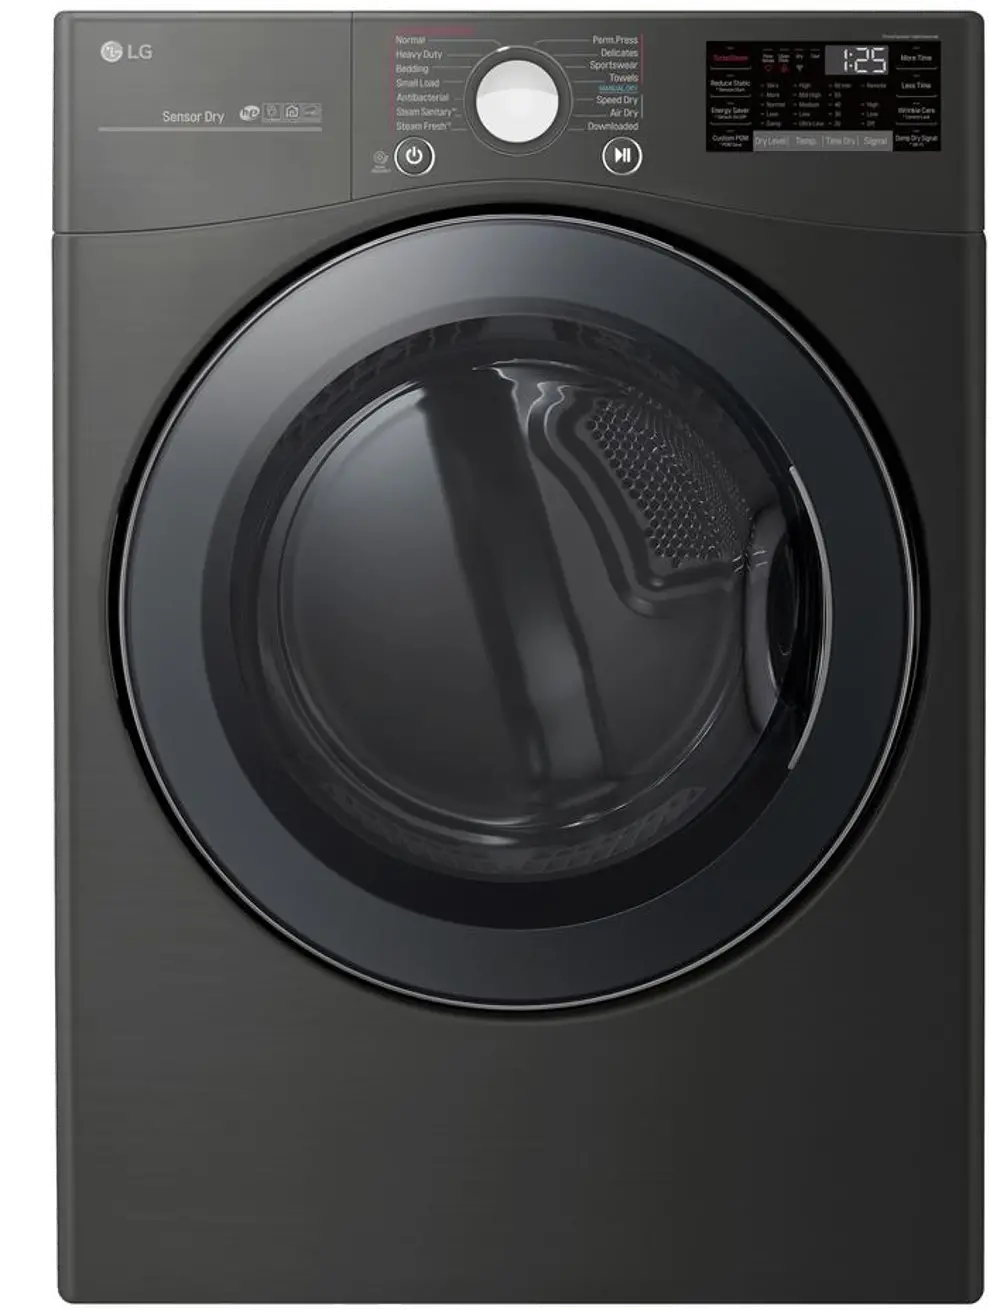 DLGX3901B LG Smart WiFi Enabled Gas Dryer with TurboSteam - 7.4 cu. ft. Black Steel-1